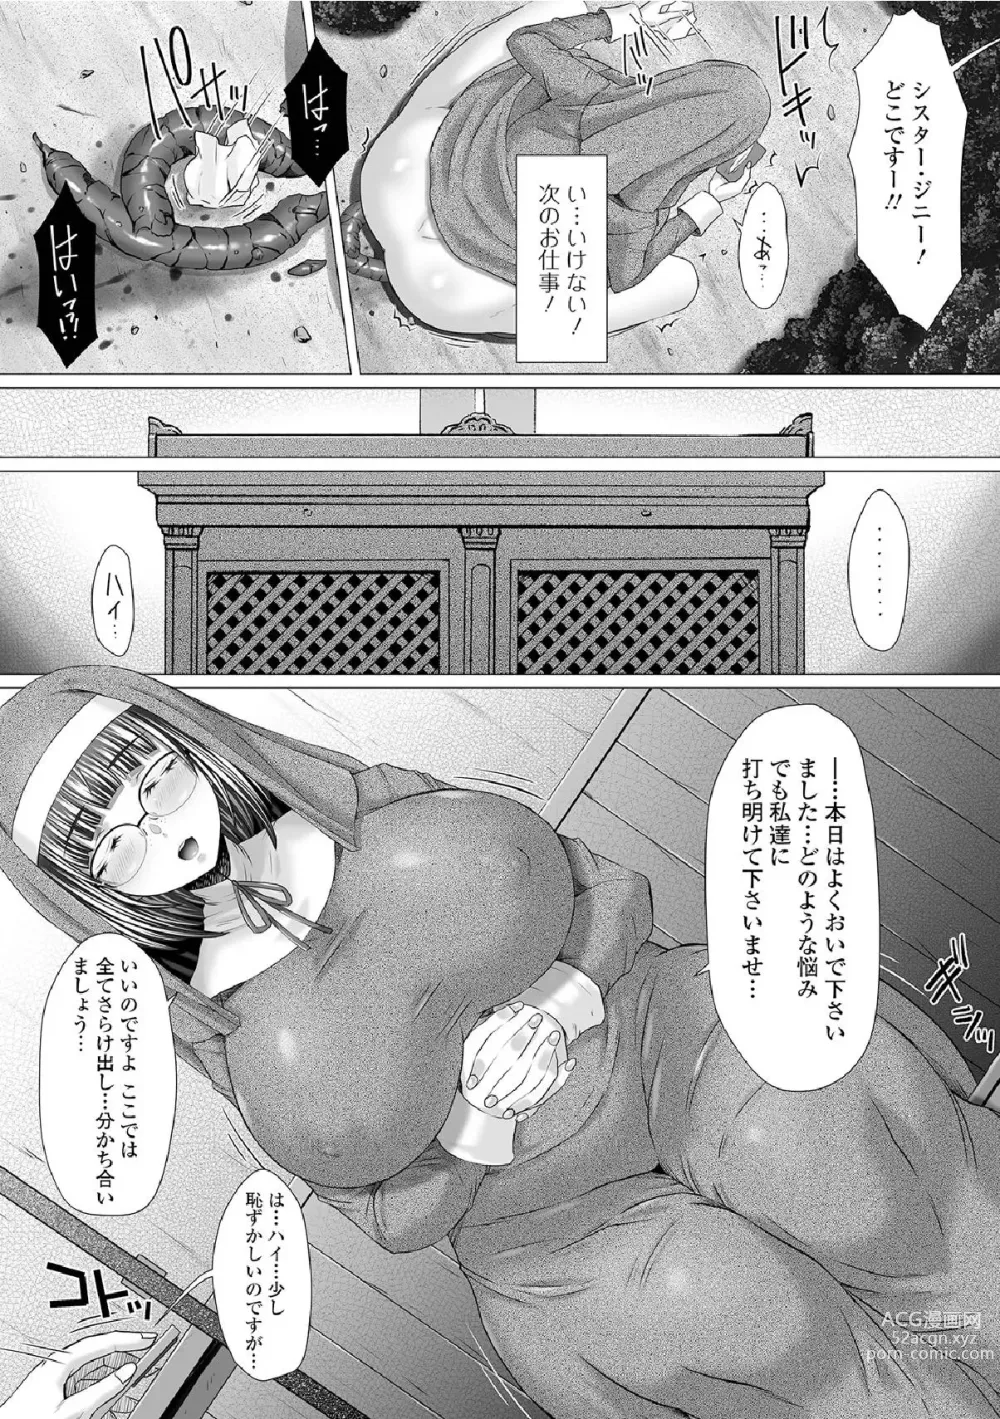 Page 8 of manga Gofujou Sister